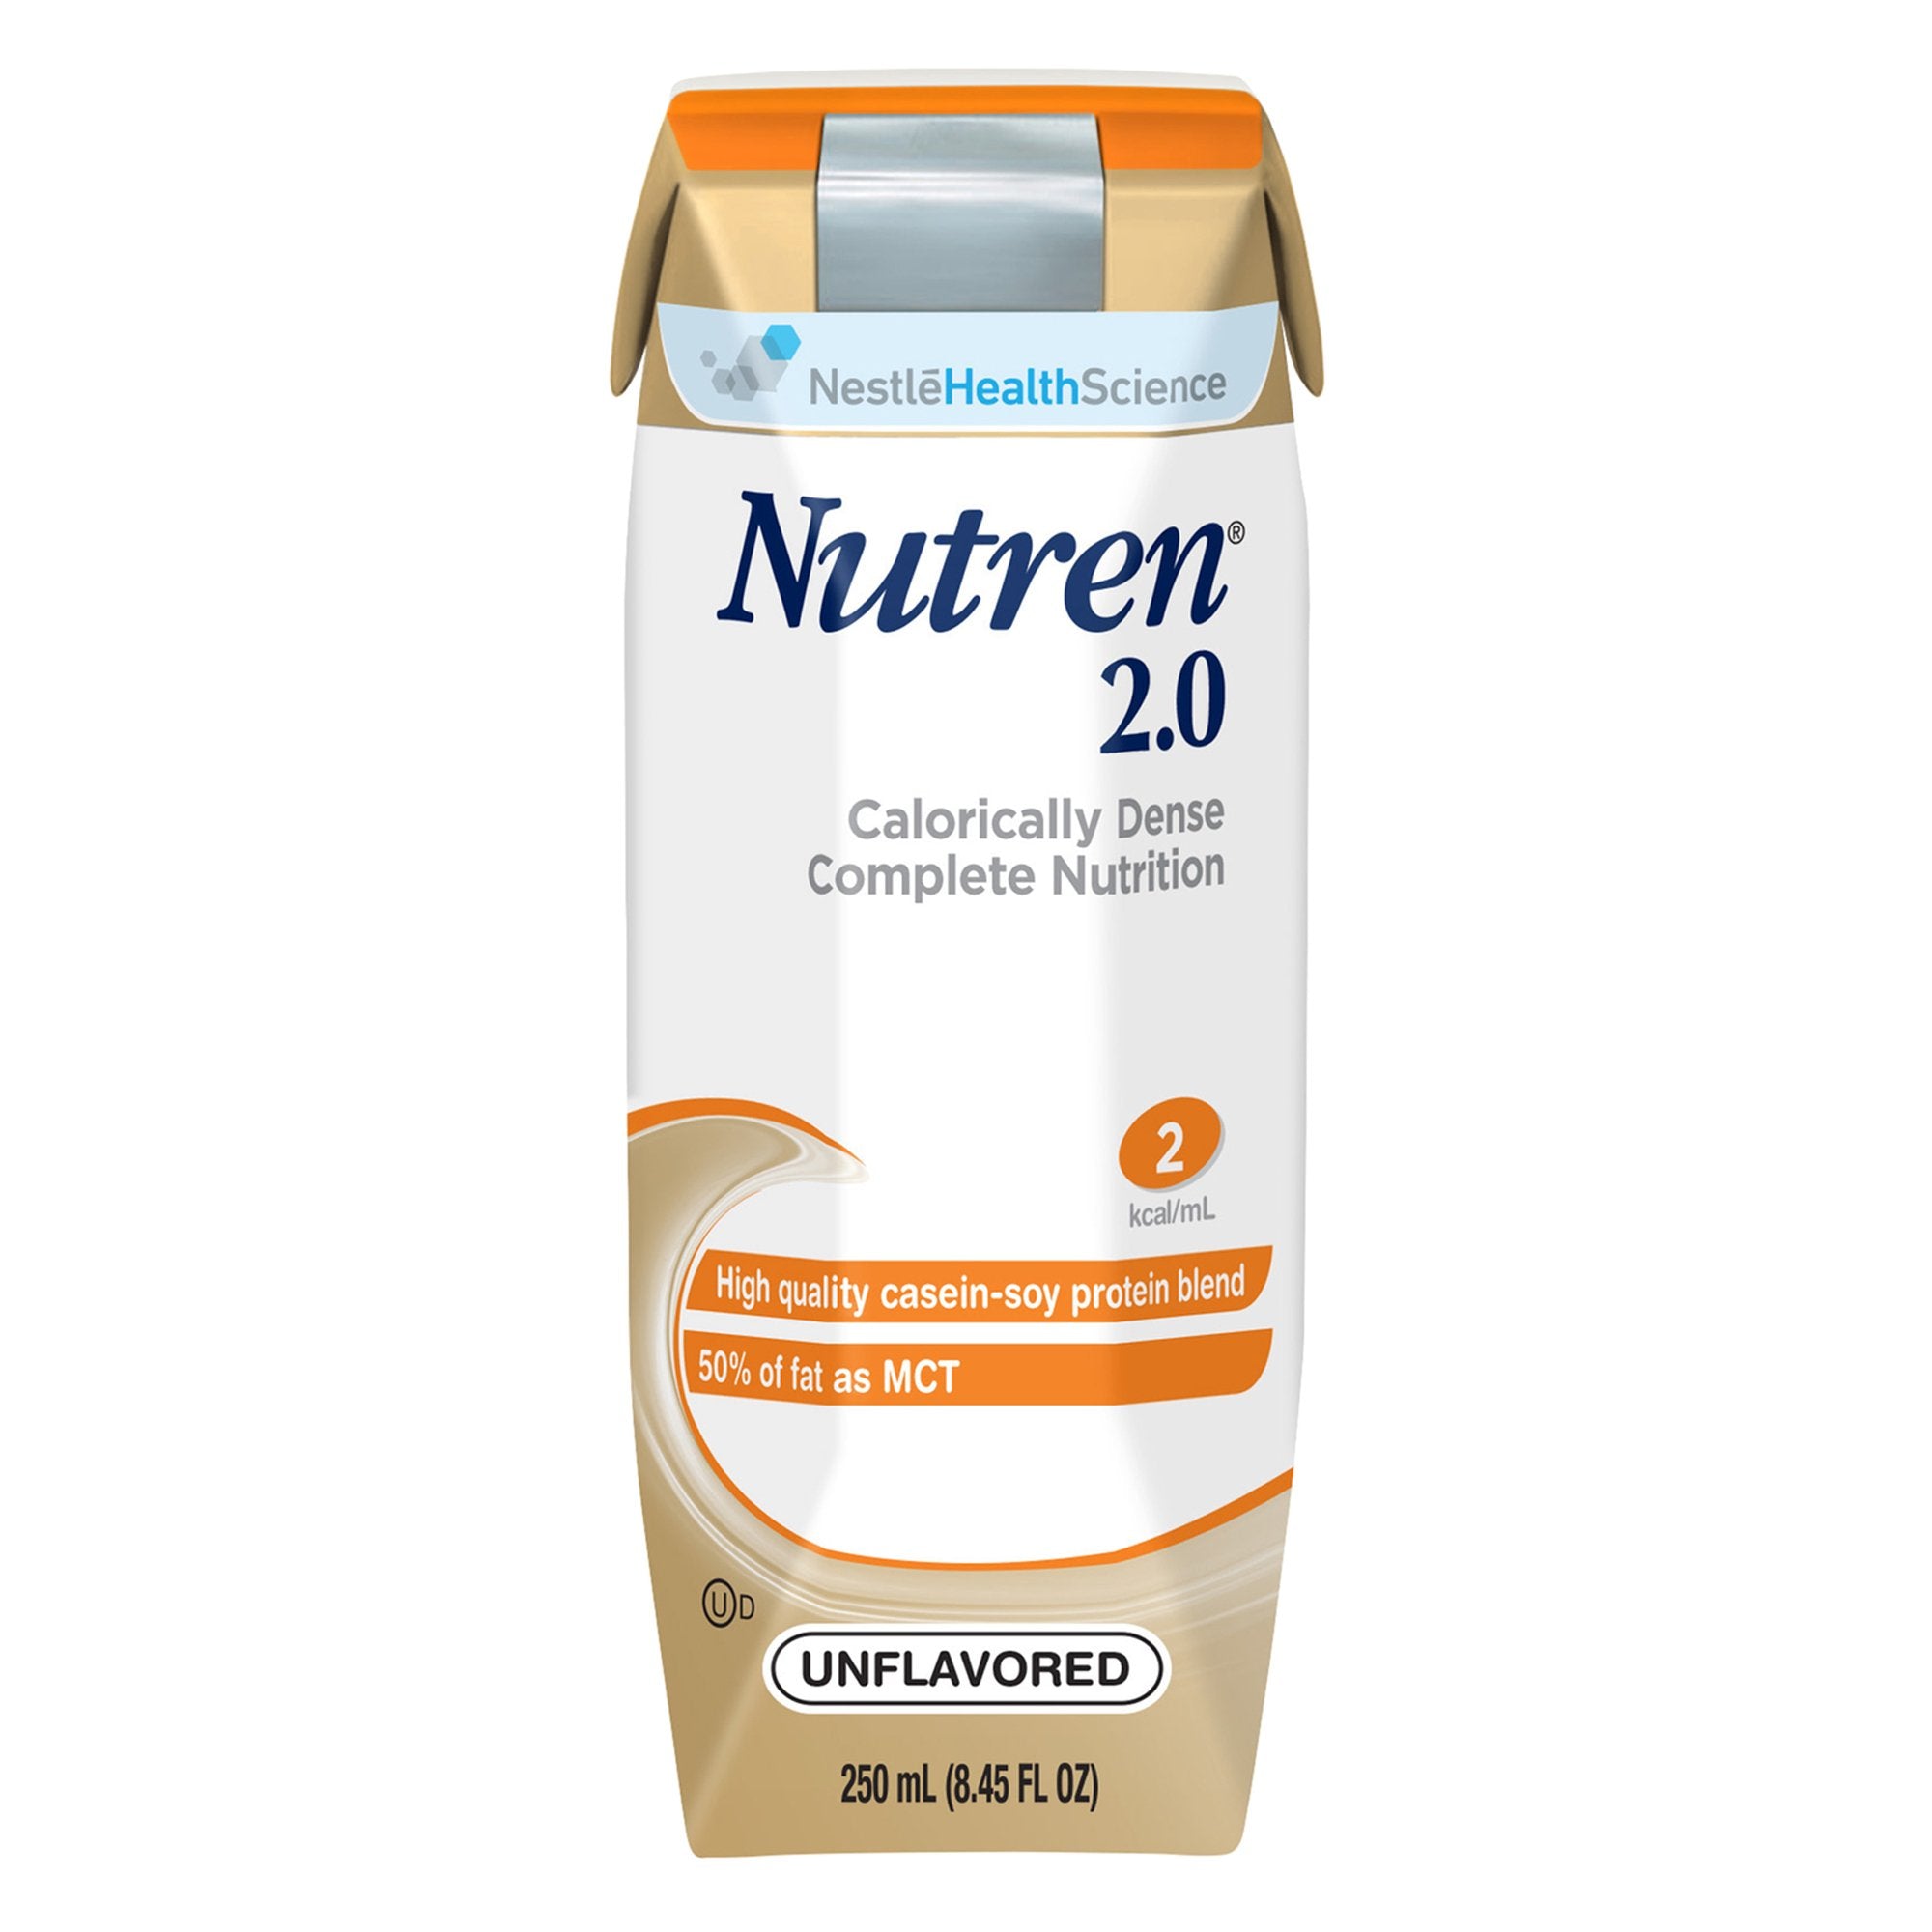 Nutren 2.0 Ready to Use Tube Feeding Formula, 8.45 oz. Carton -Case of 24